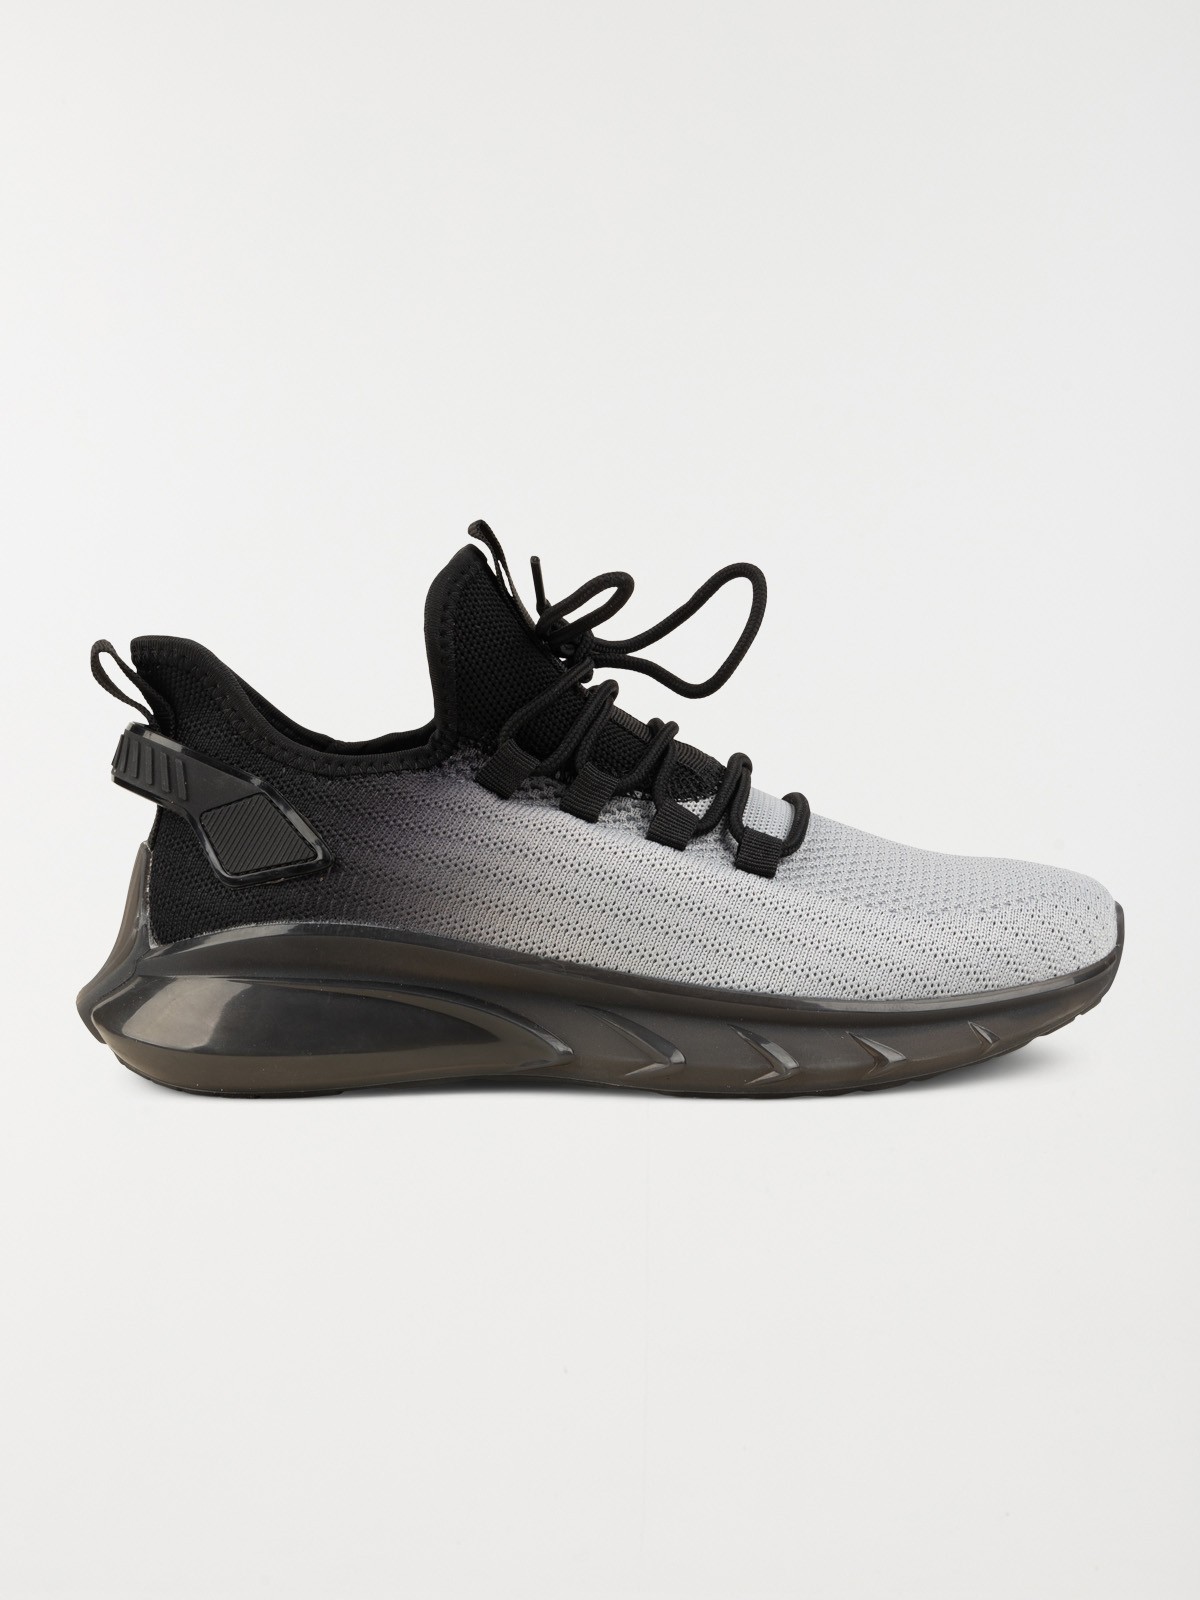 Chaussure sport noir gris homme (40-46) - DistriCenter